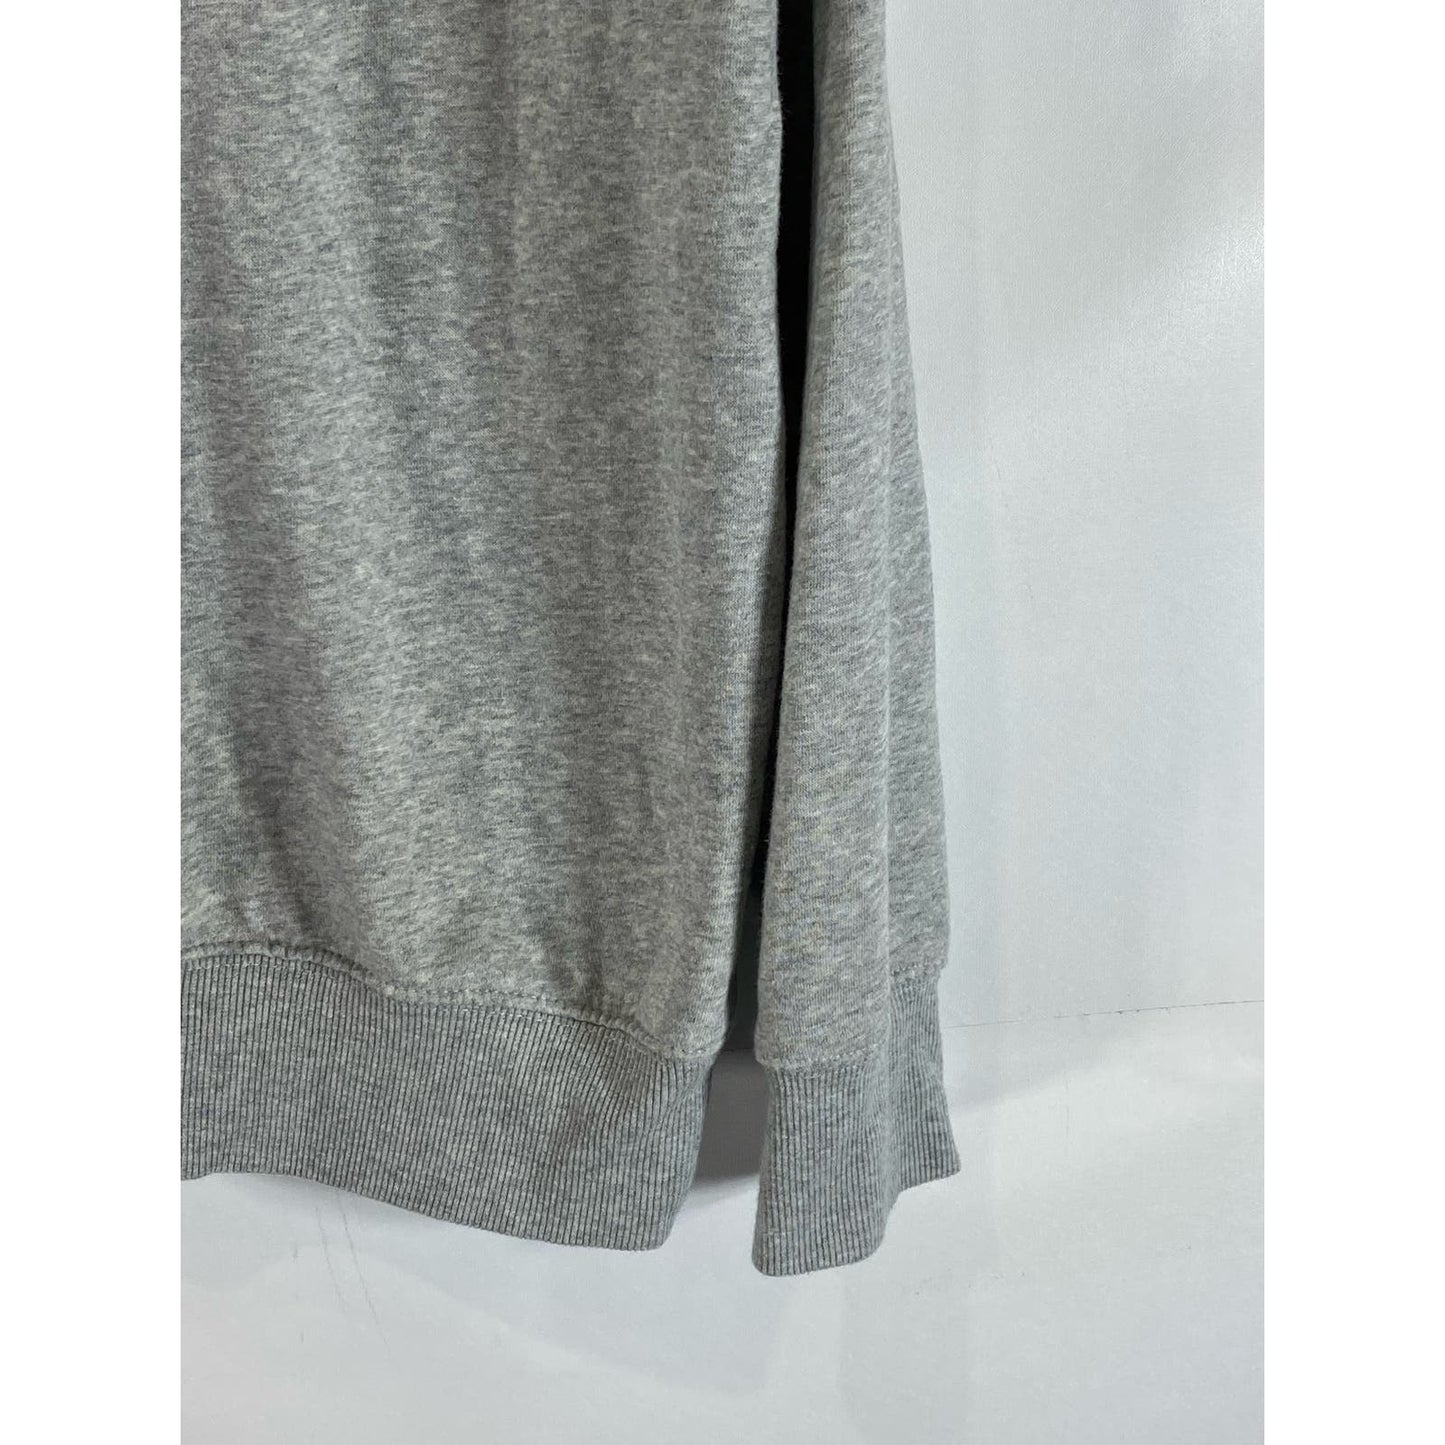 GOODFELLOW & CO Men's Light Gray Lipton Graphic Regular-Fit Pullover Hoodie SZ L